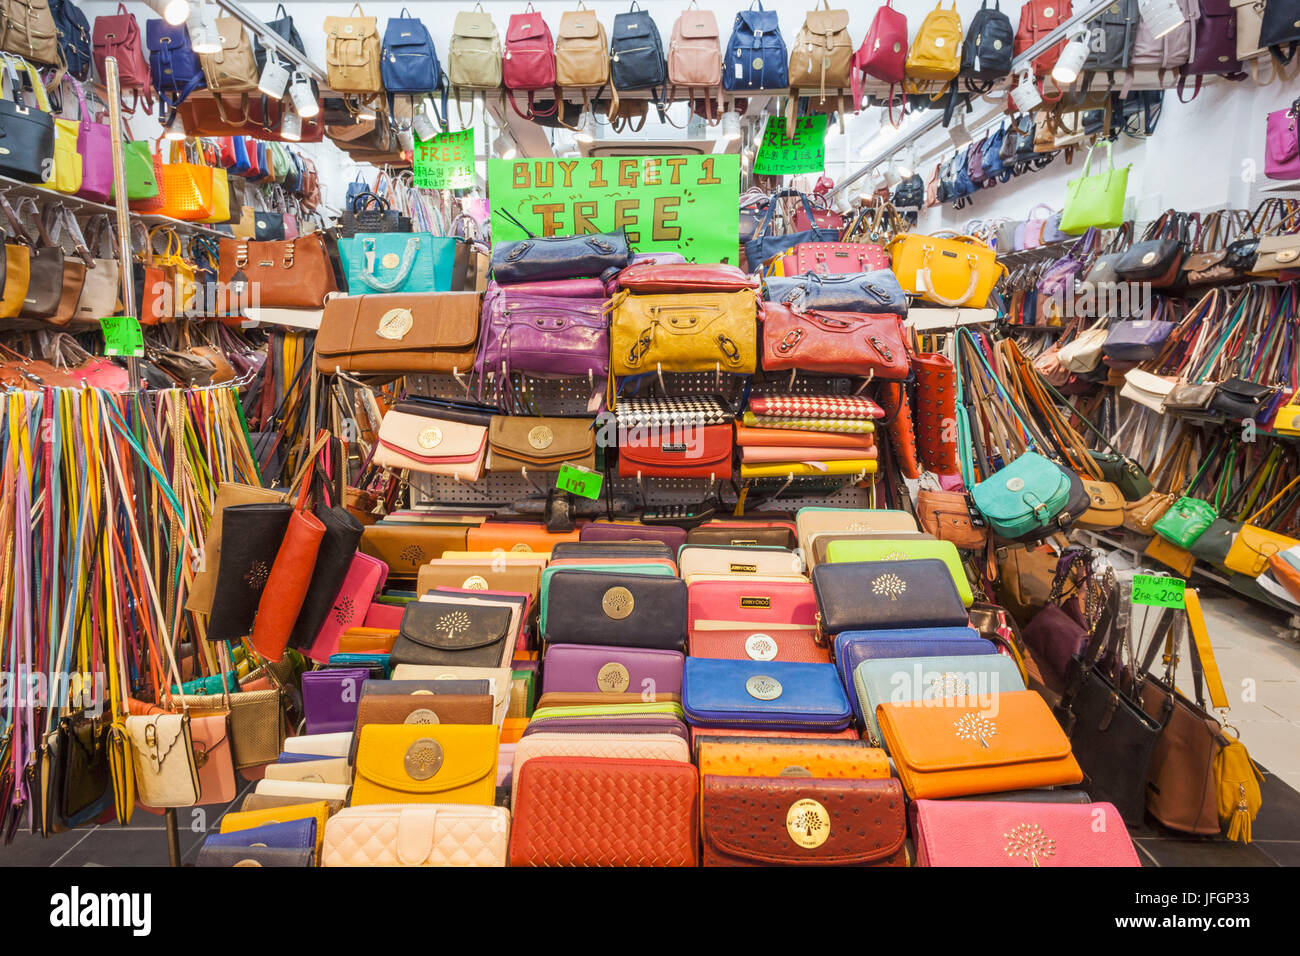 https://c8.alamy.com/comp/JFGP33/china-hong-kong-stanley-market-shop-display-of-fake-purses-and-handbags-JFGP33.jpg